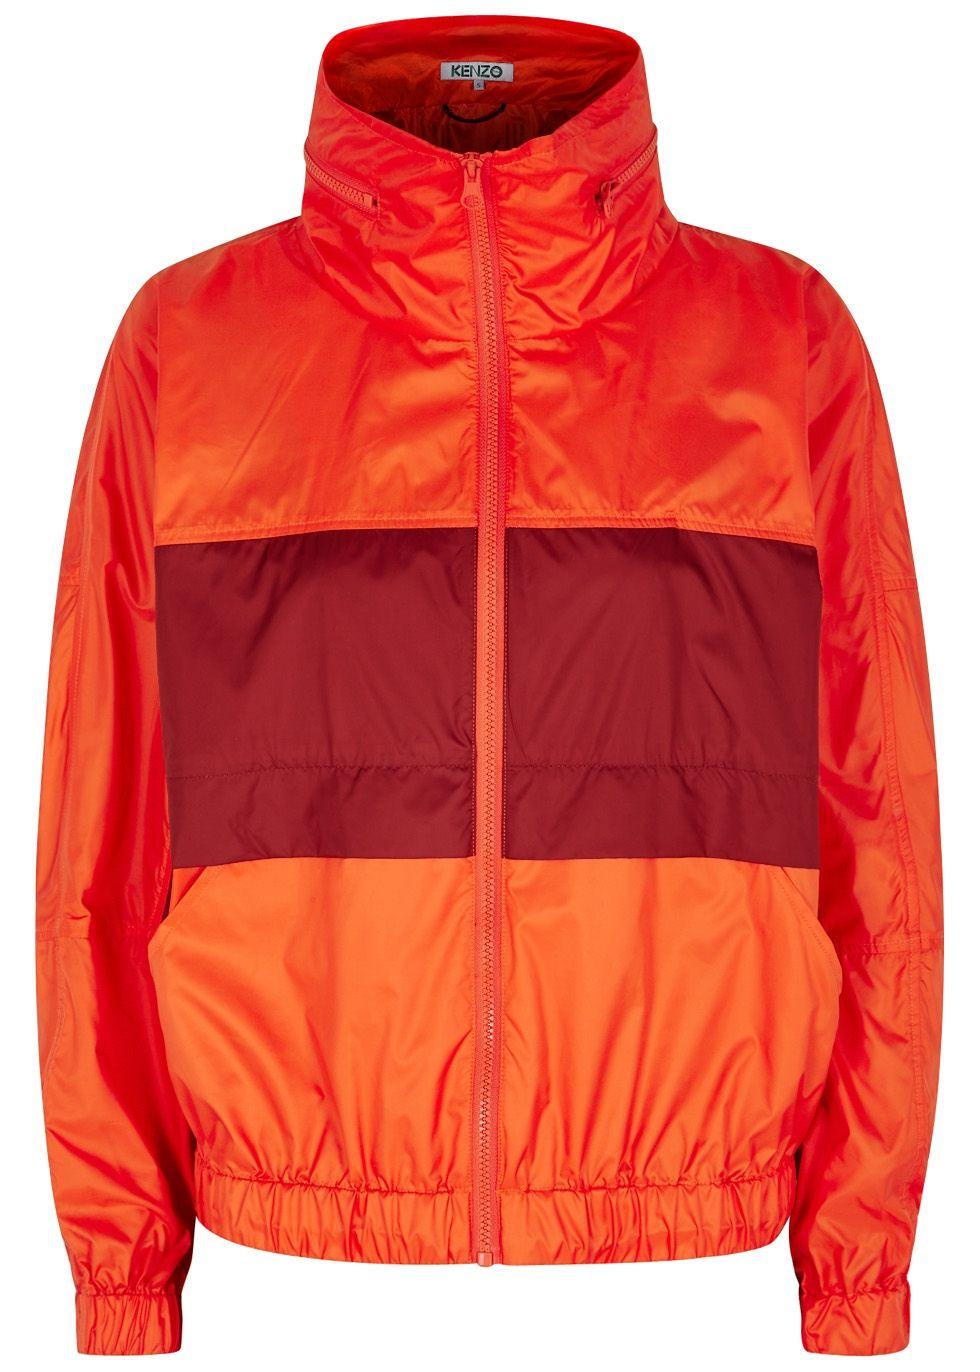 Burgundy and Orange Logo - KENZO orange and burgundy shell jacket Logo print at back, zip-away ...